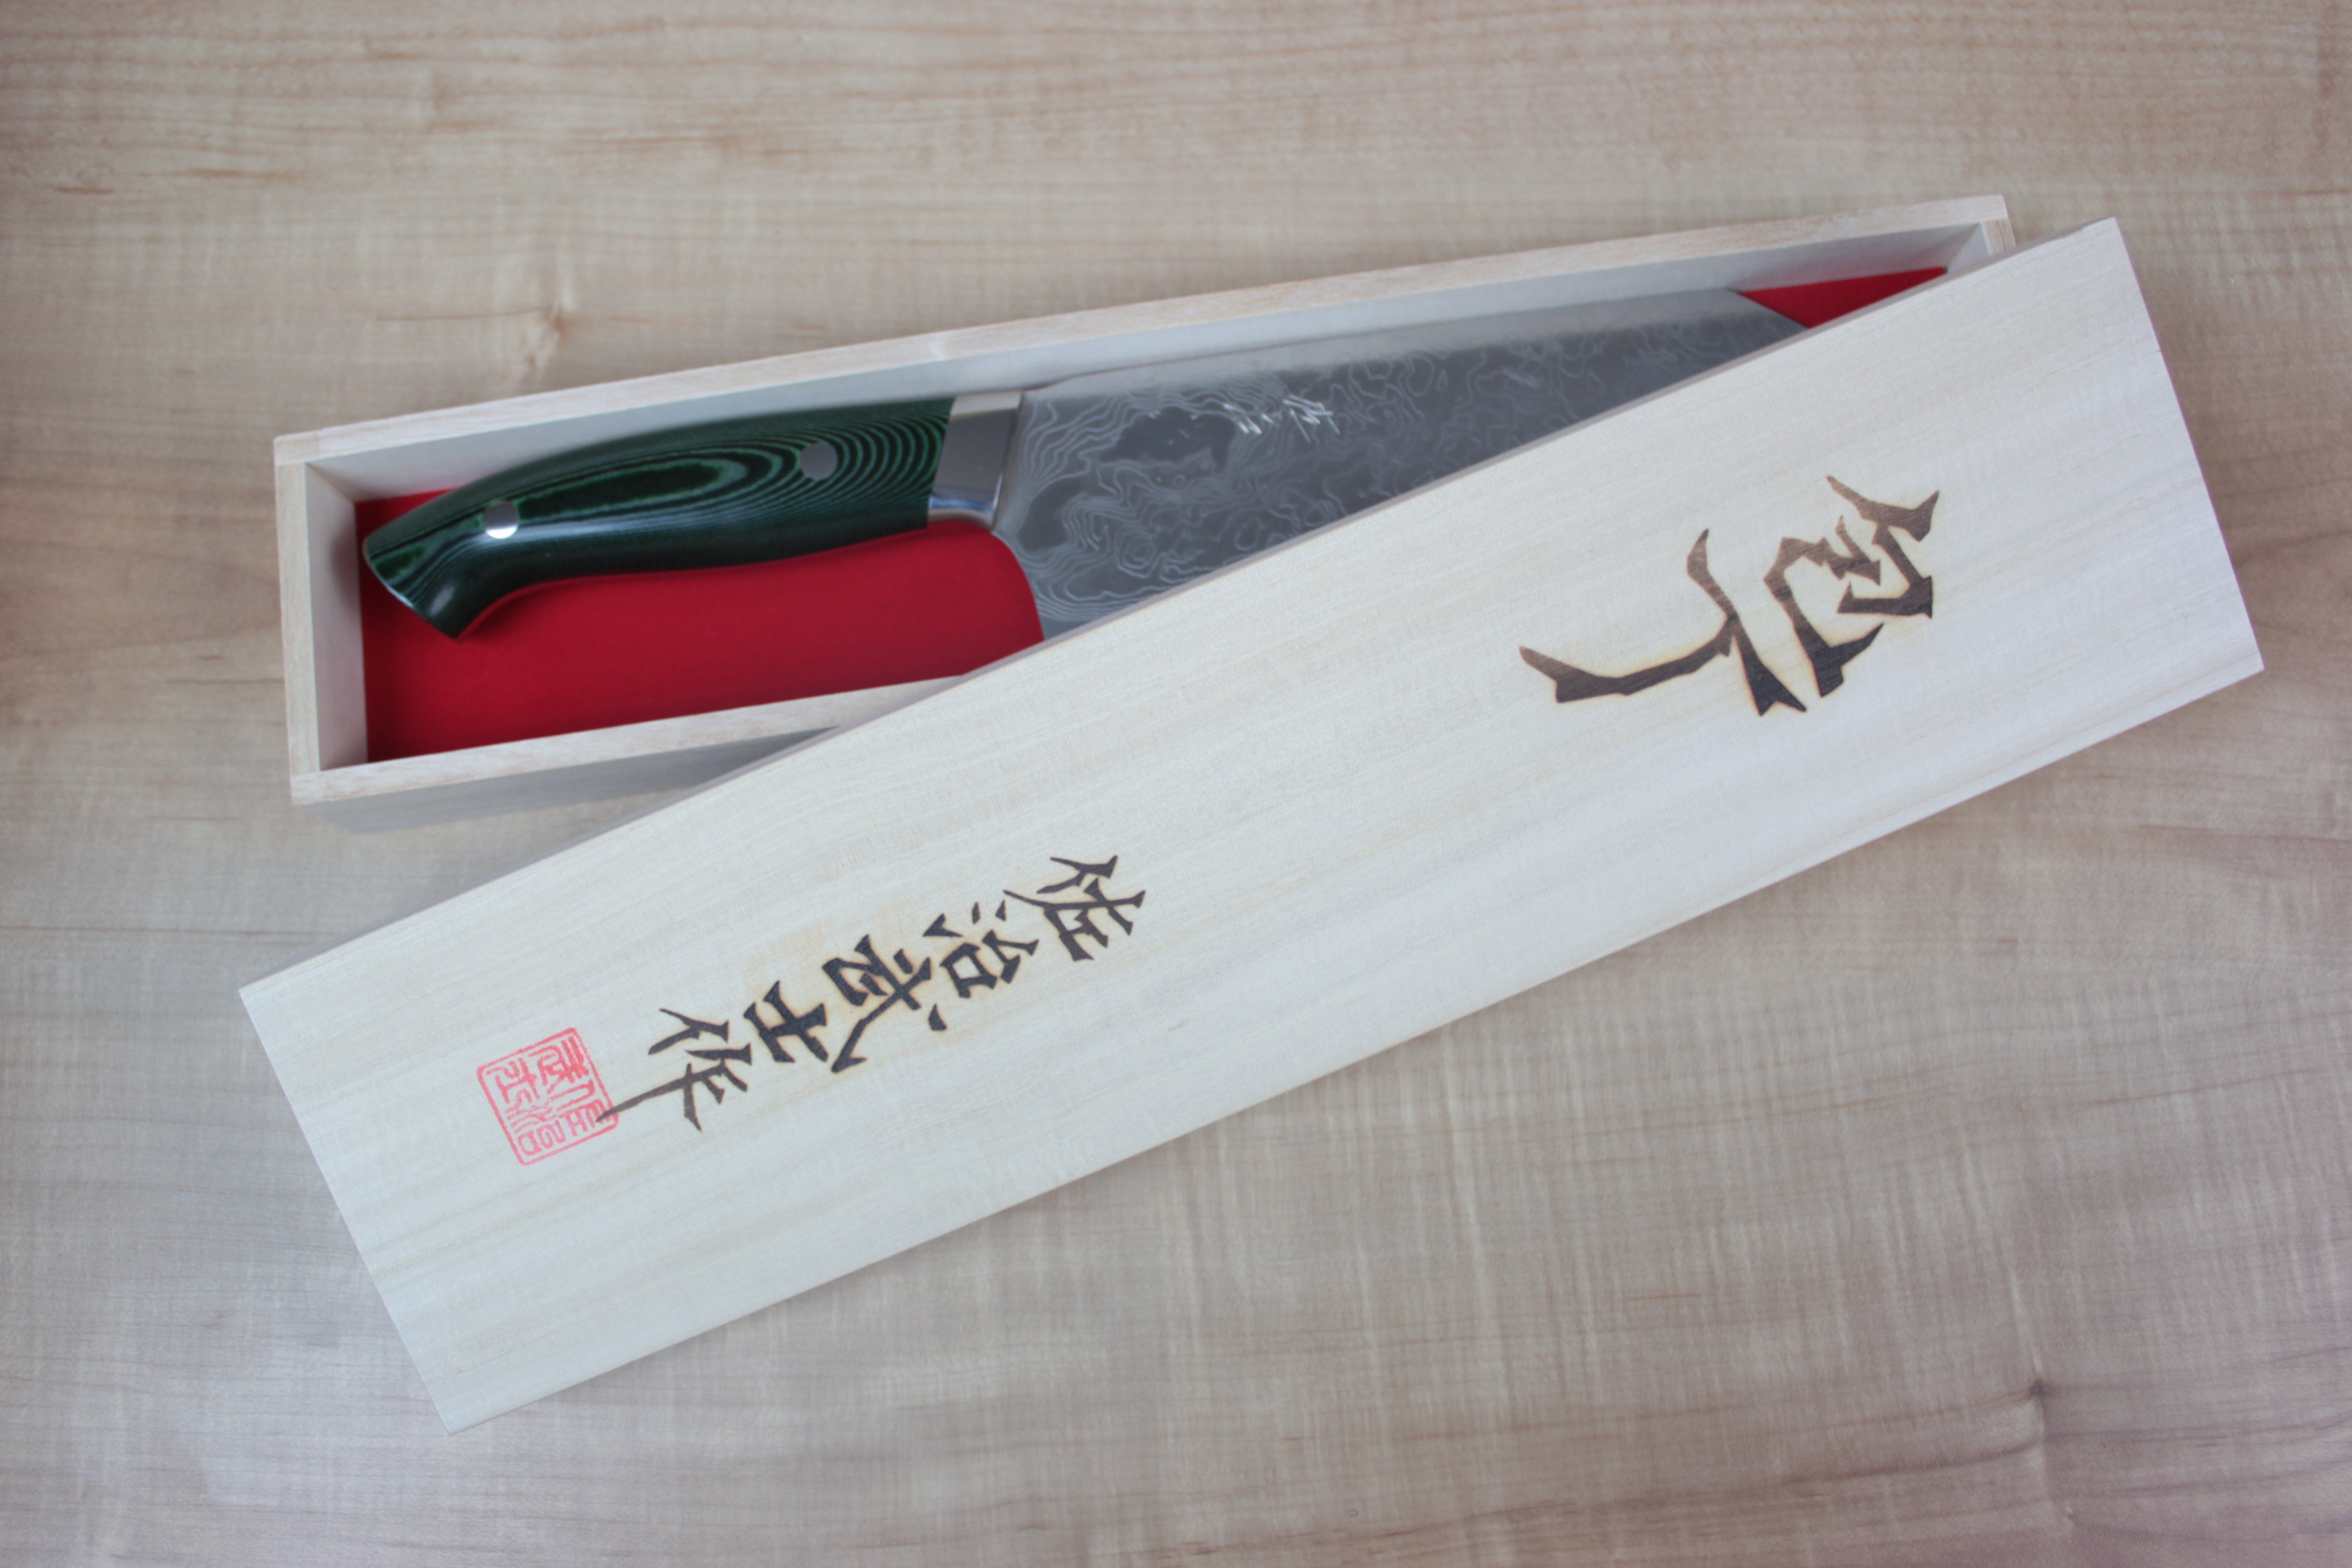 Takeshi Saji R-2 Custom Damascus Wild Series Paring Knife